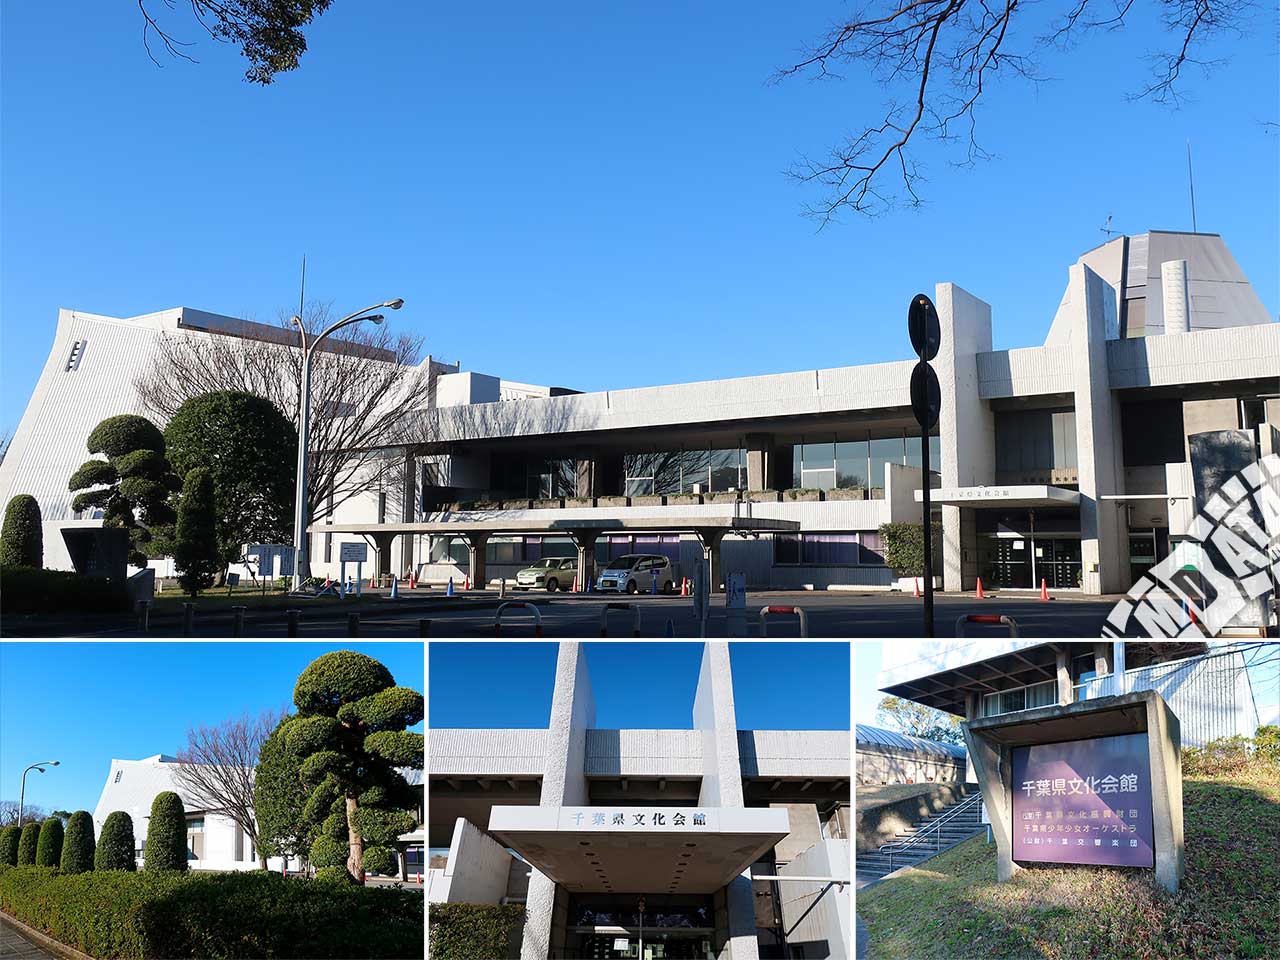 千葉県文化会館の写真 撮影日:2020/1/4 Photo taken on 2020/01/04